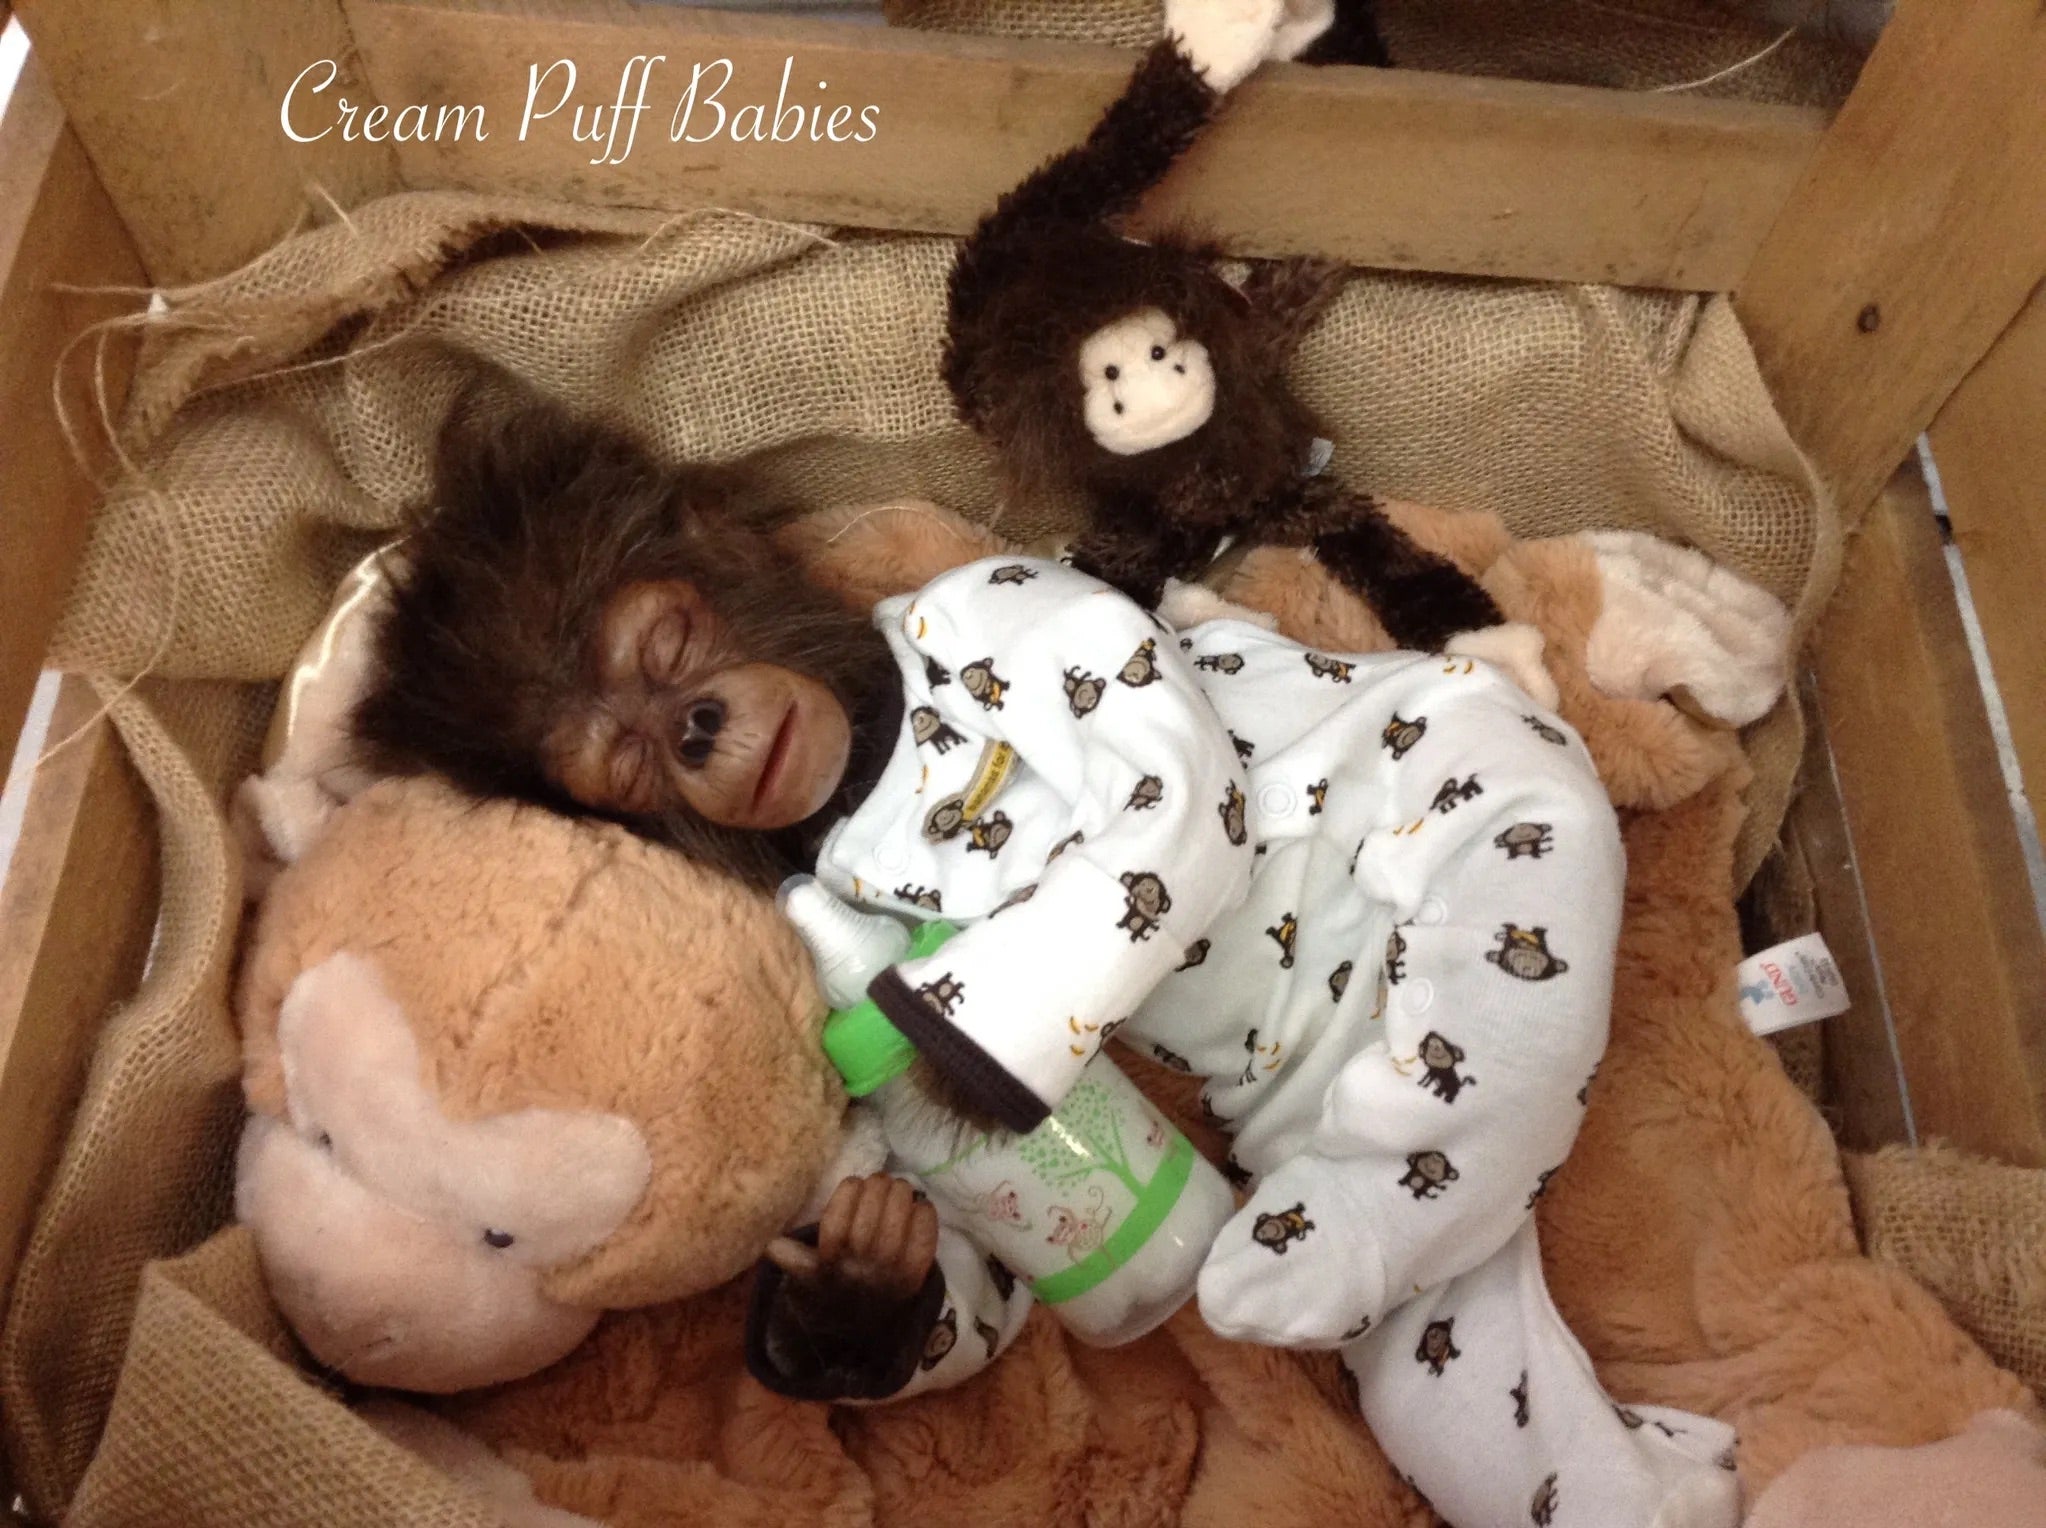 Cream Puff Babies realistic reborn dolls, best reborn doll artist in USA, reborn dolls New York, vinyl reborn dolls, reborn baby monkey doll, collectible gorilla reborn dolls, newborn gorilla reborn doll, lifelike baby chimpanzee doll